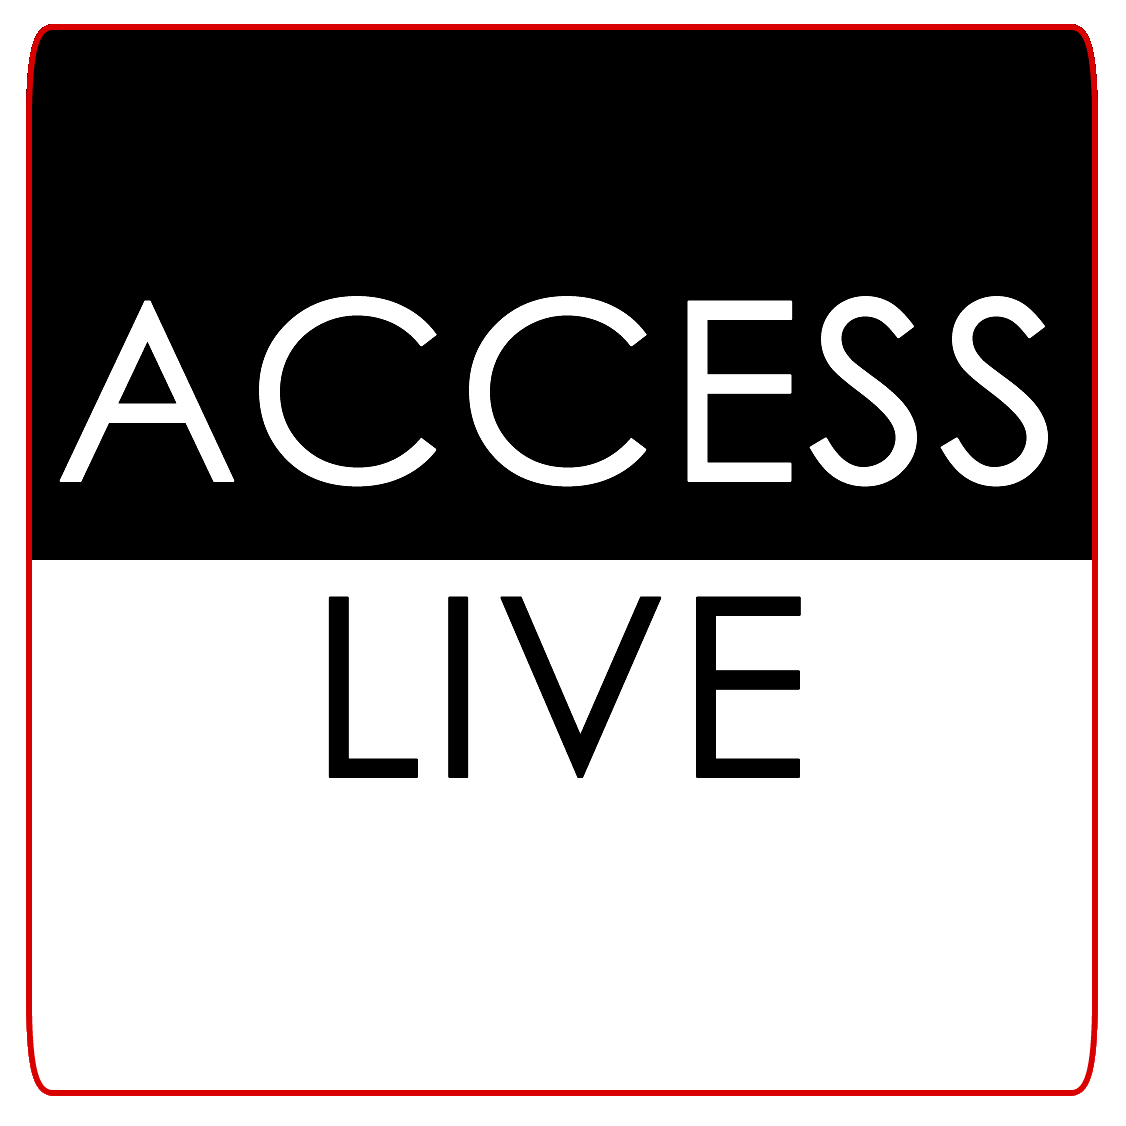 Access live